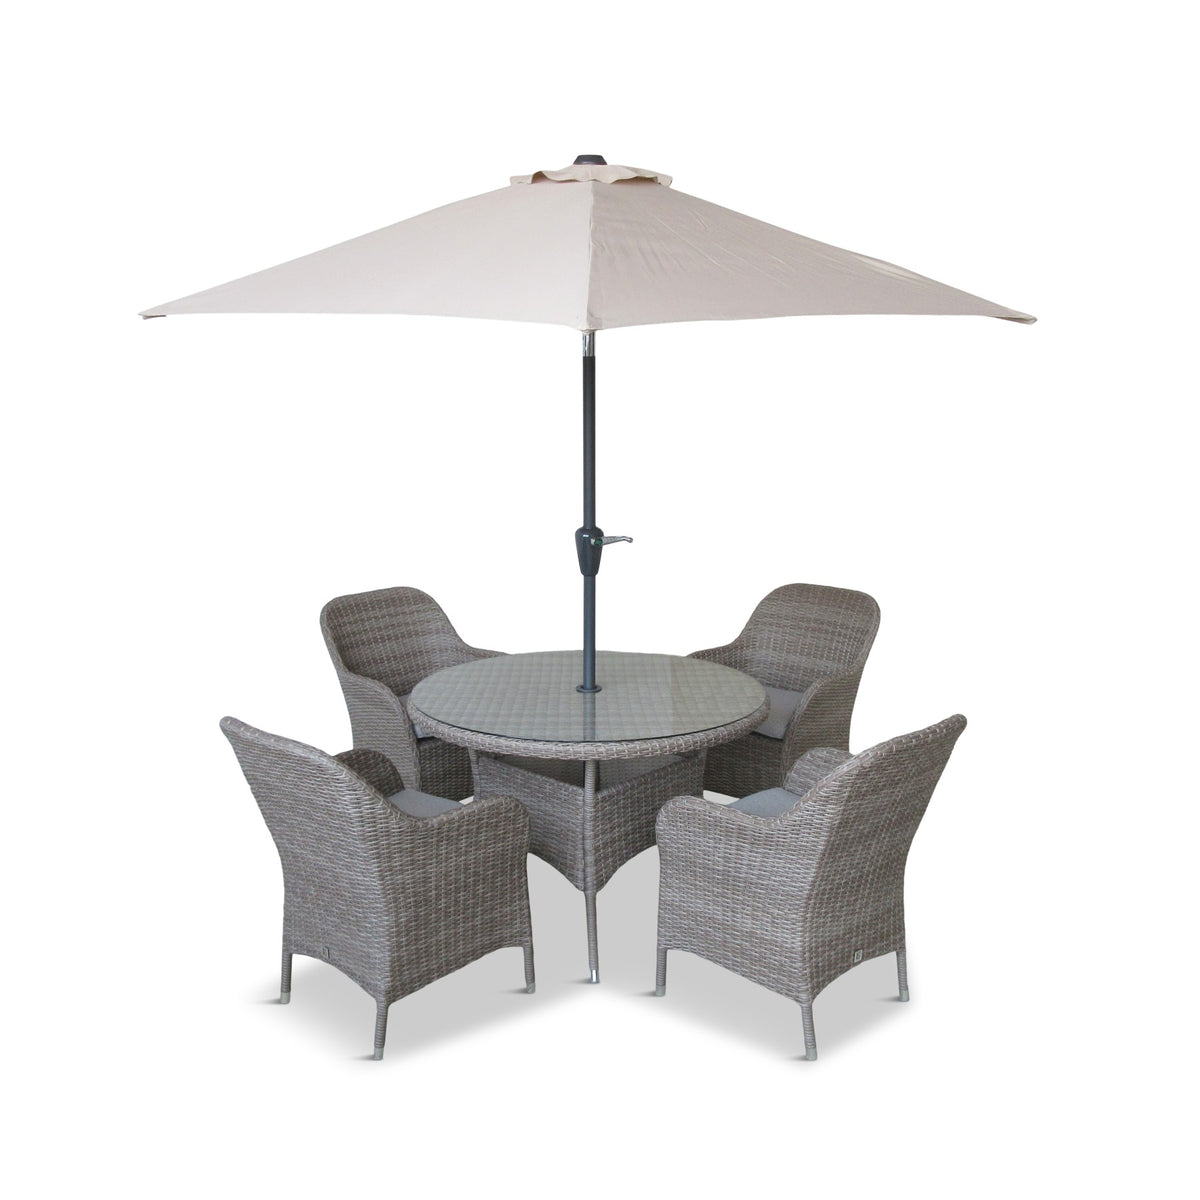 LG Outdoor Monte Carlo Sand Rattan Weave 4 Seat Garden Furniture Dining Set